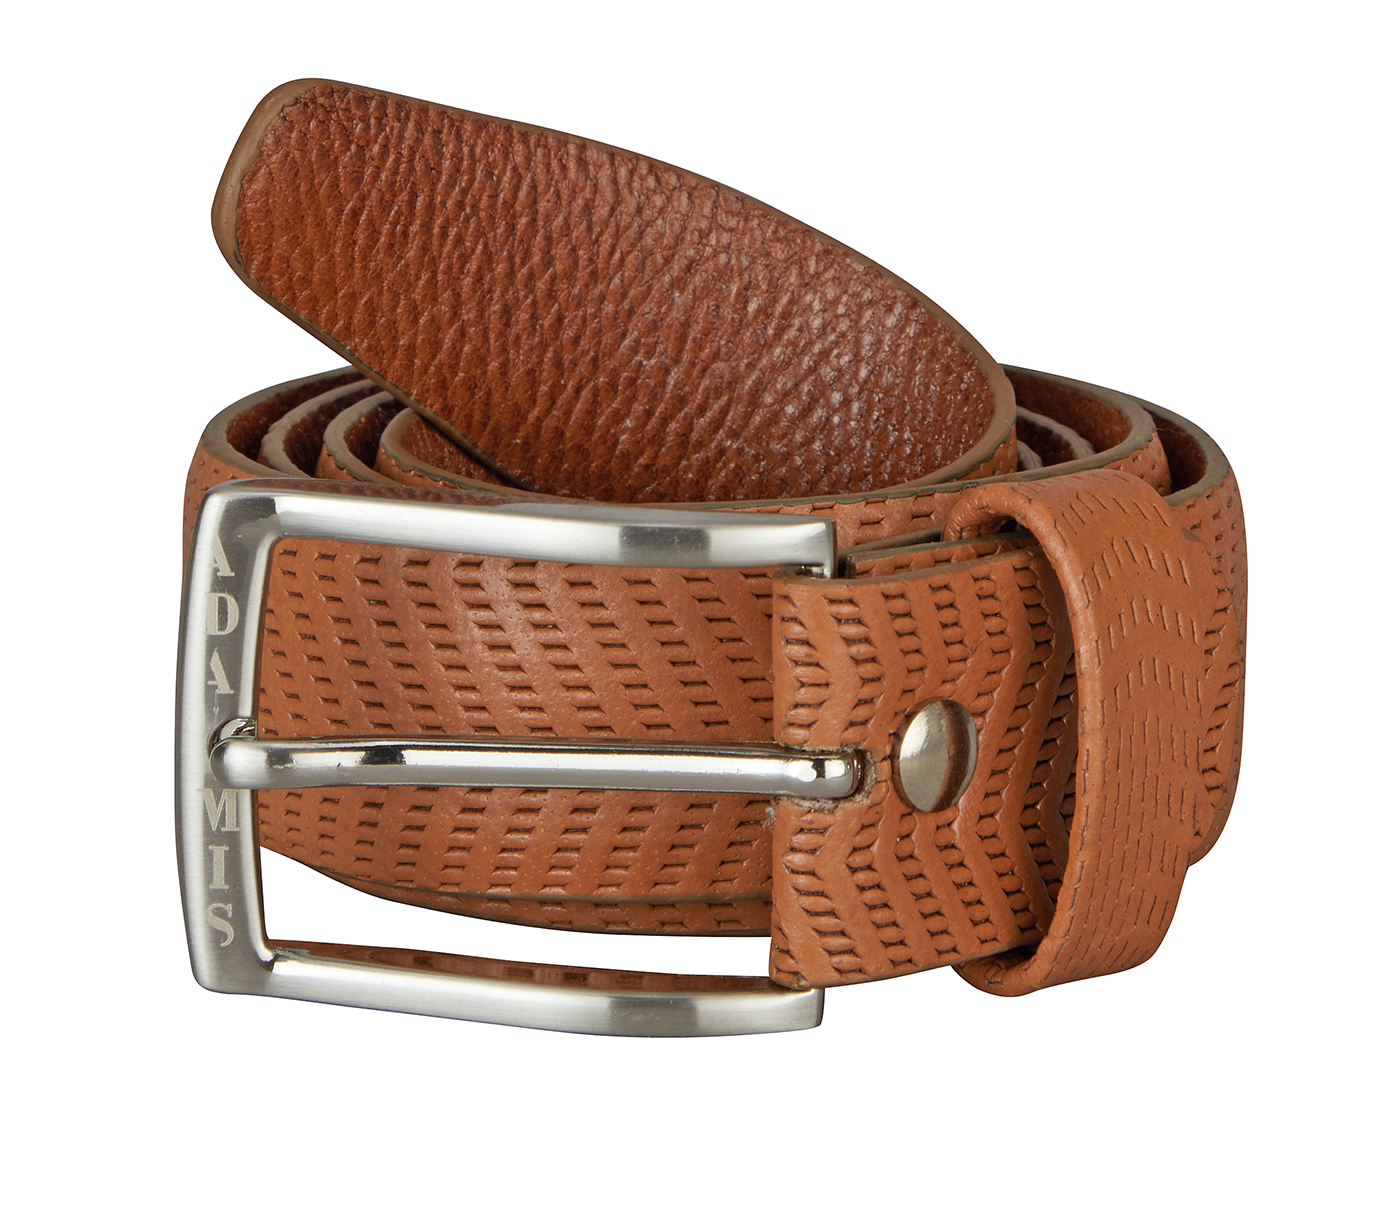 BL181-Men's stylish belt in Genuine Leather- - Tan